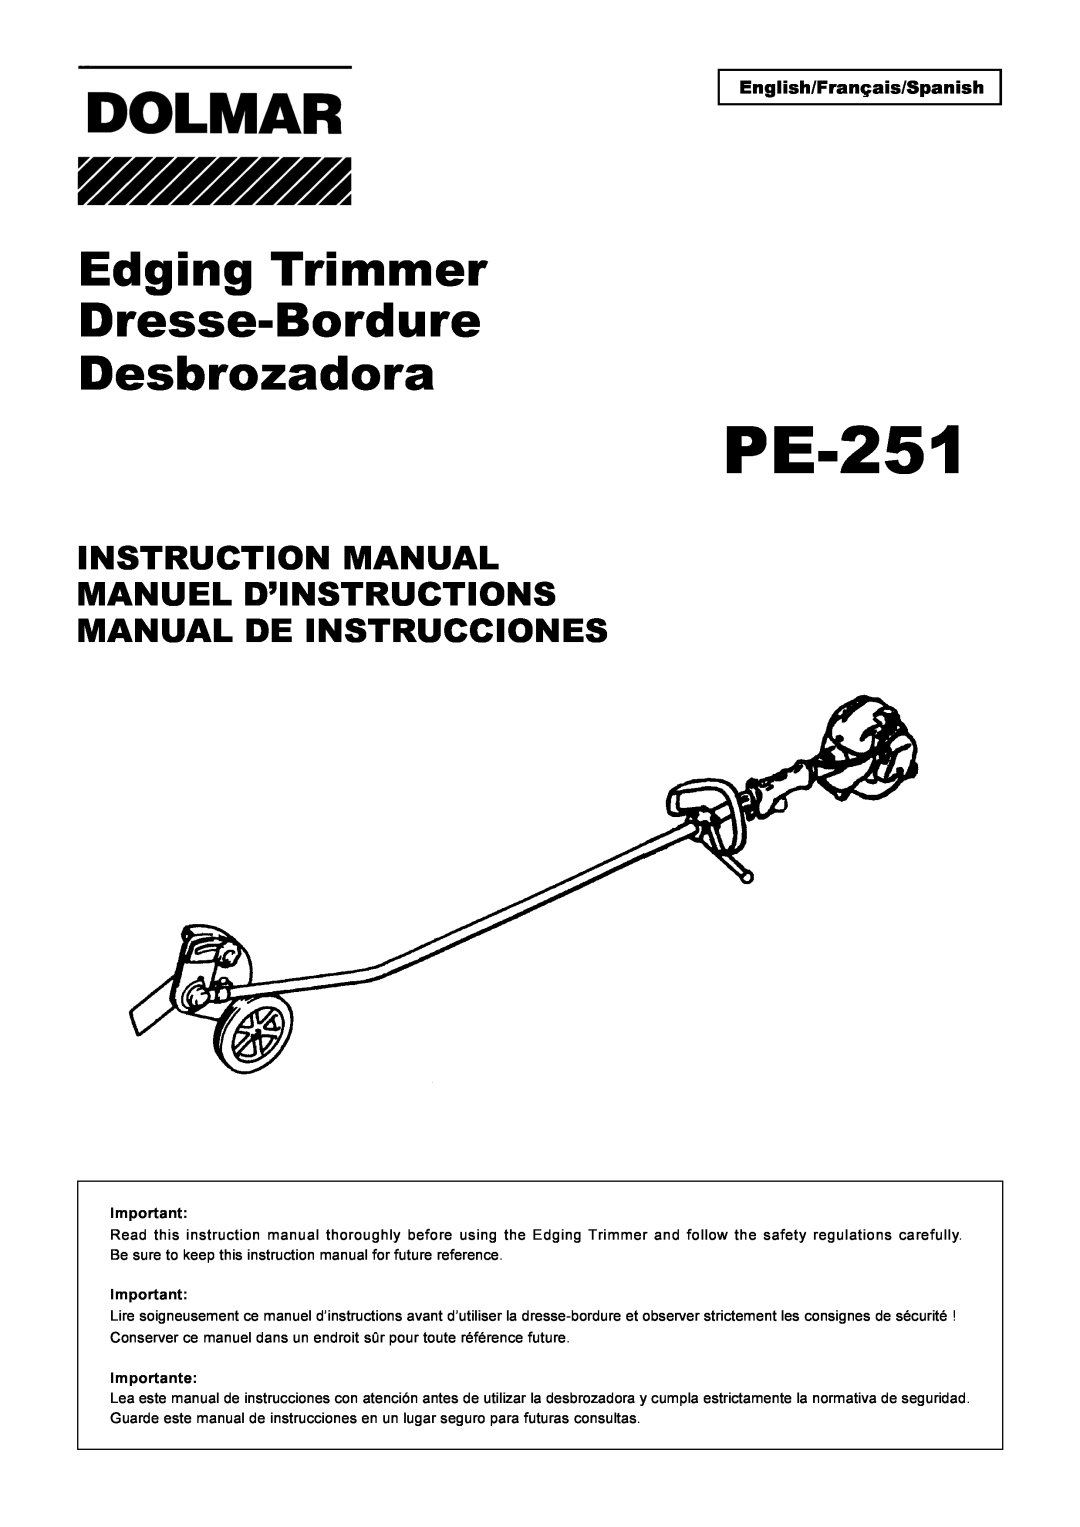 Dolmar PE-251 instruction manual Edging Trimmer Dresse-Bordure Desbrozadora, Instruction Manual Manuel D’Instructions 